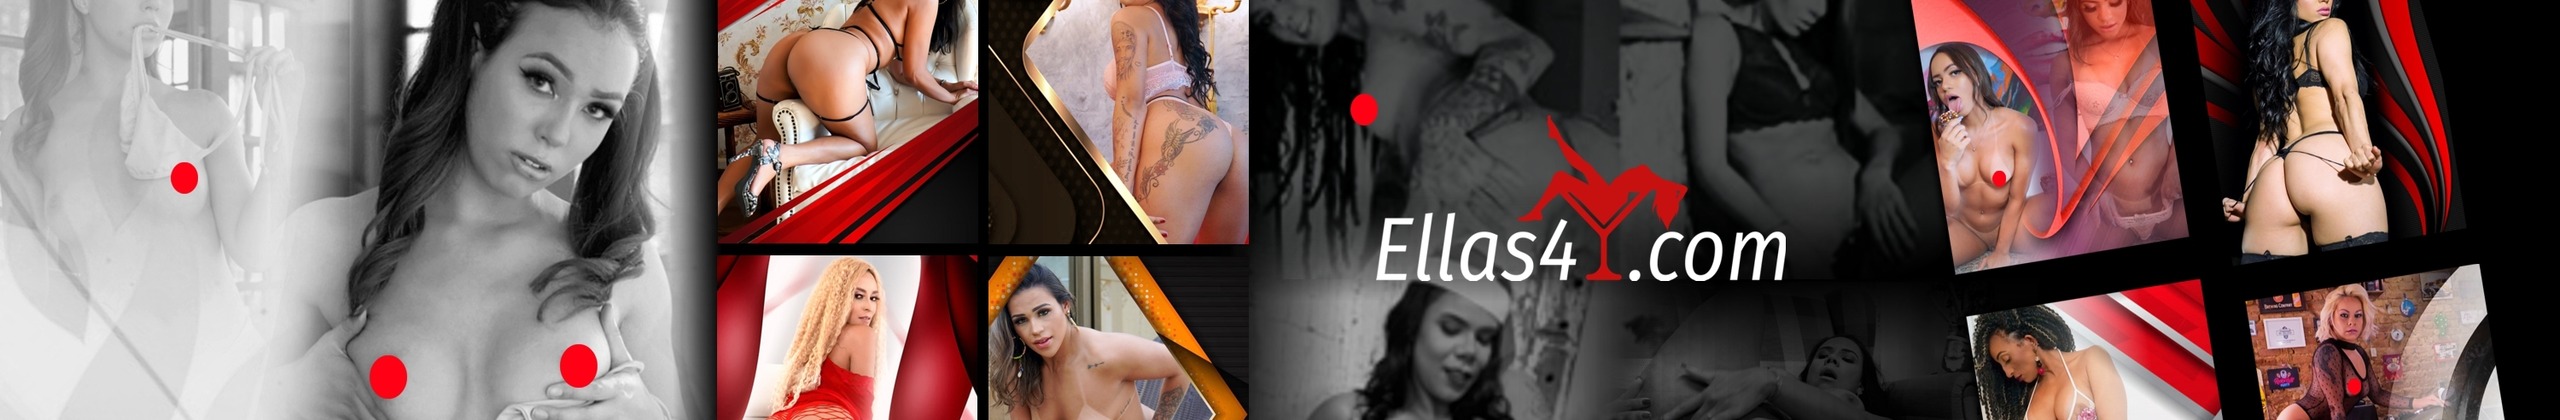 Ellas4.com - profile image